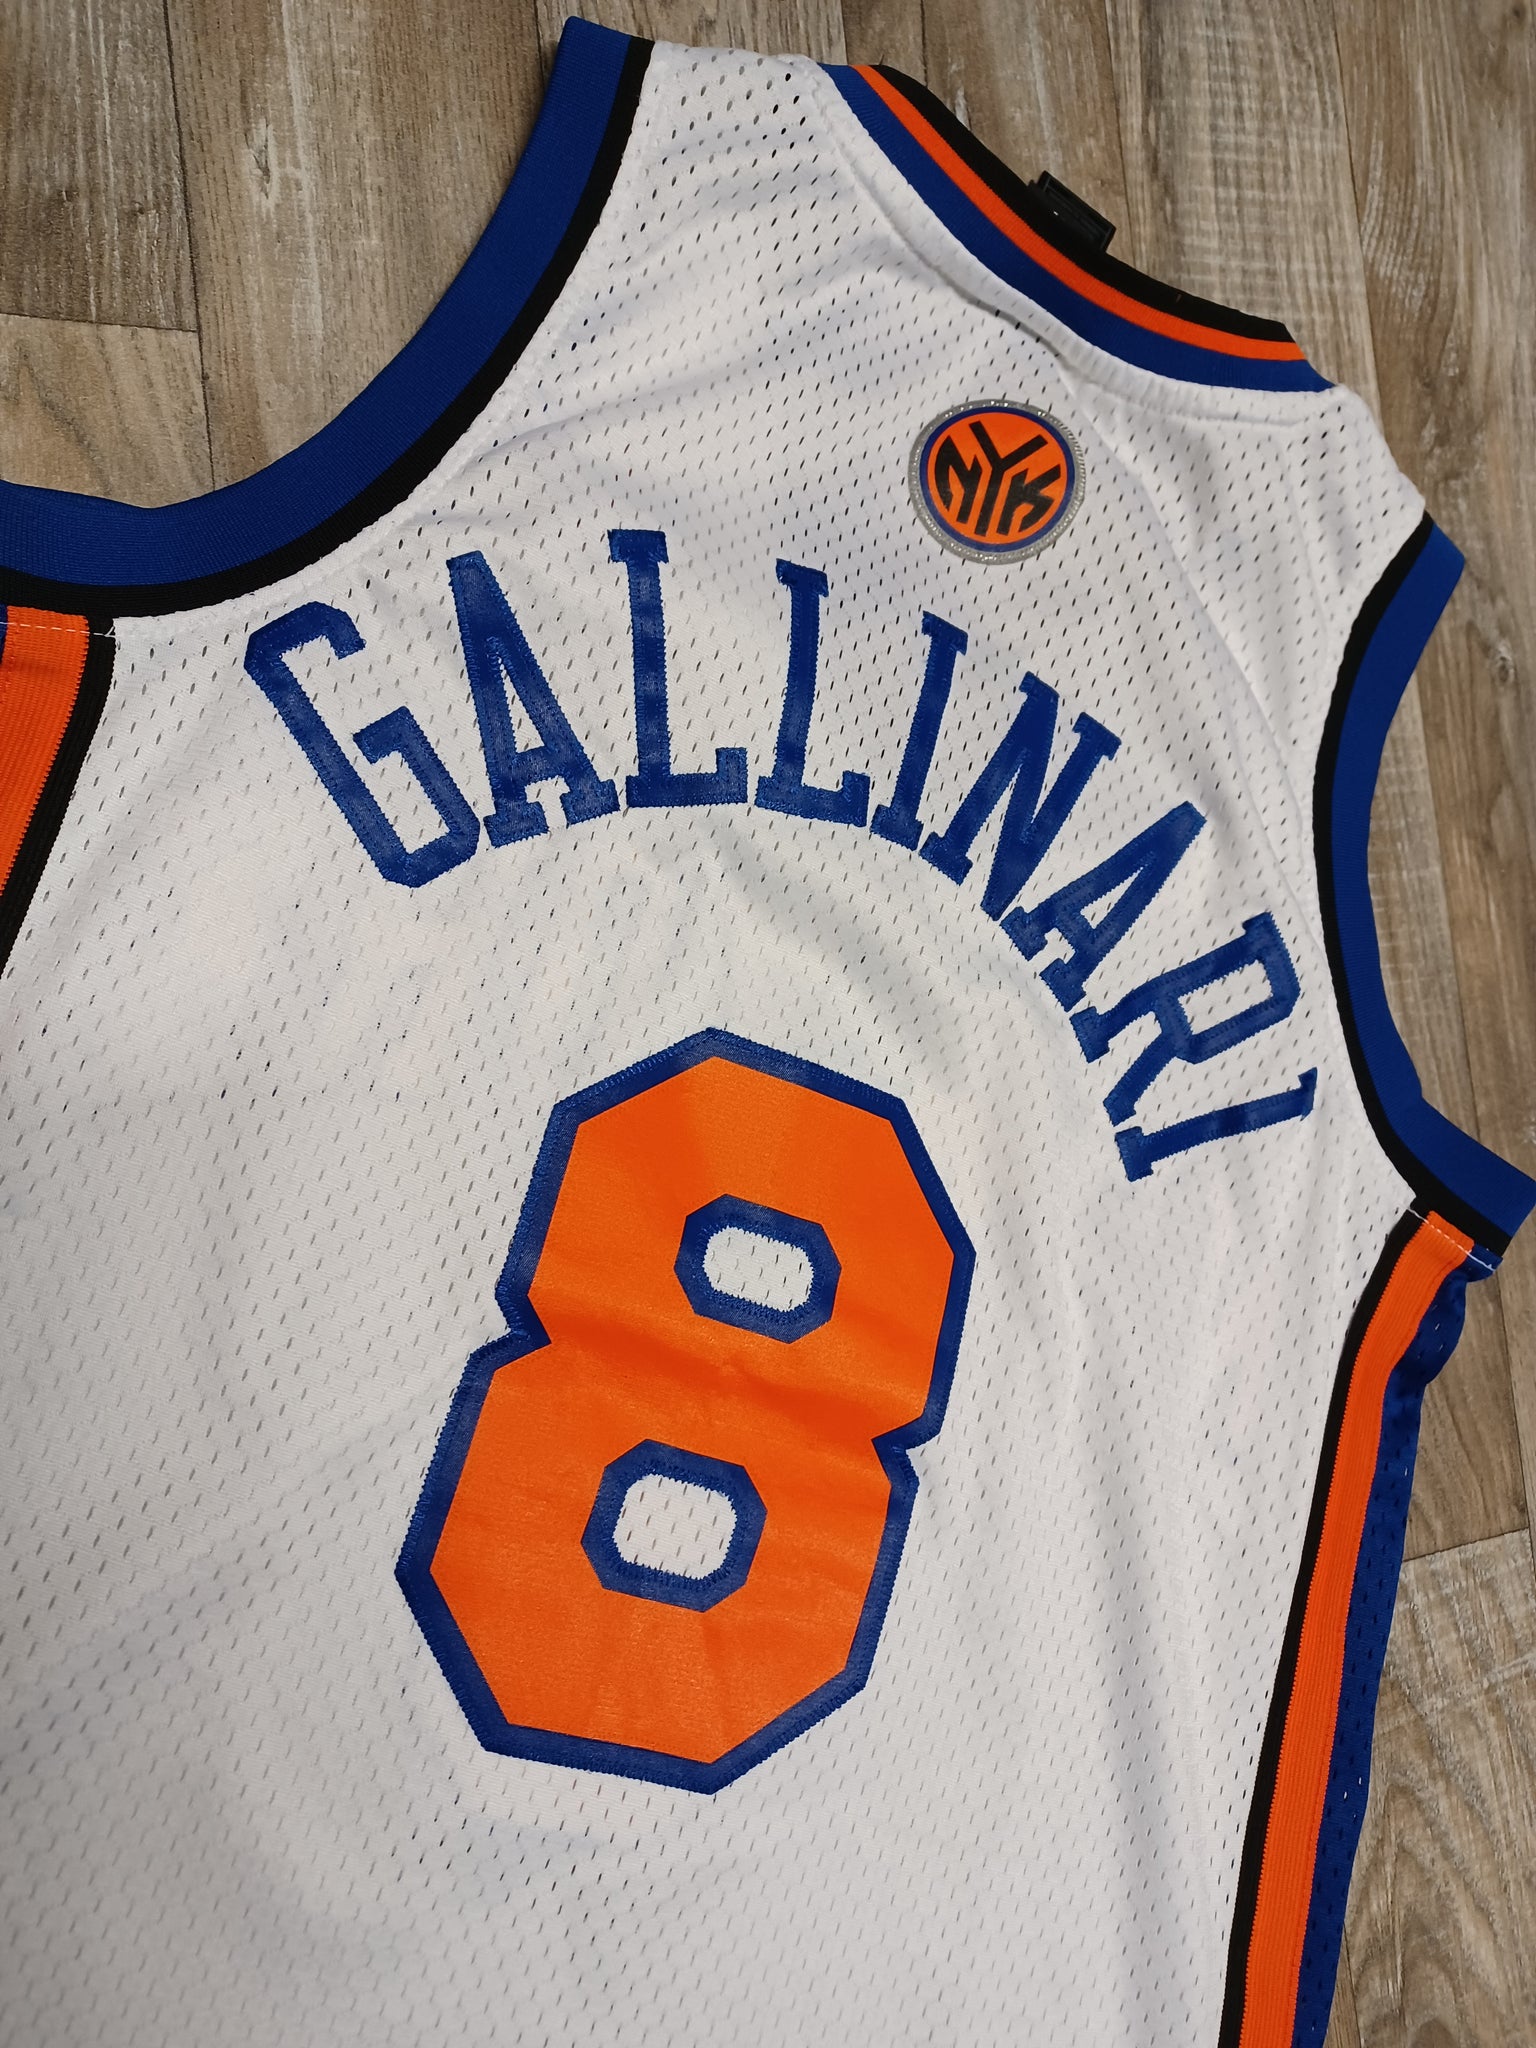 Adidas New York Knicks Danilo Gallinari NBA Jersey